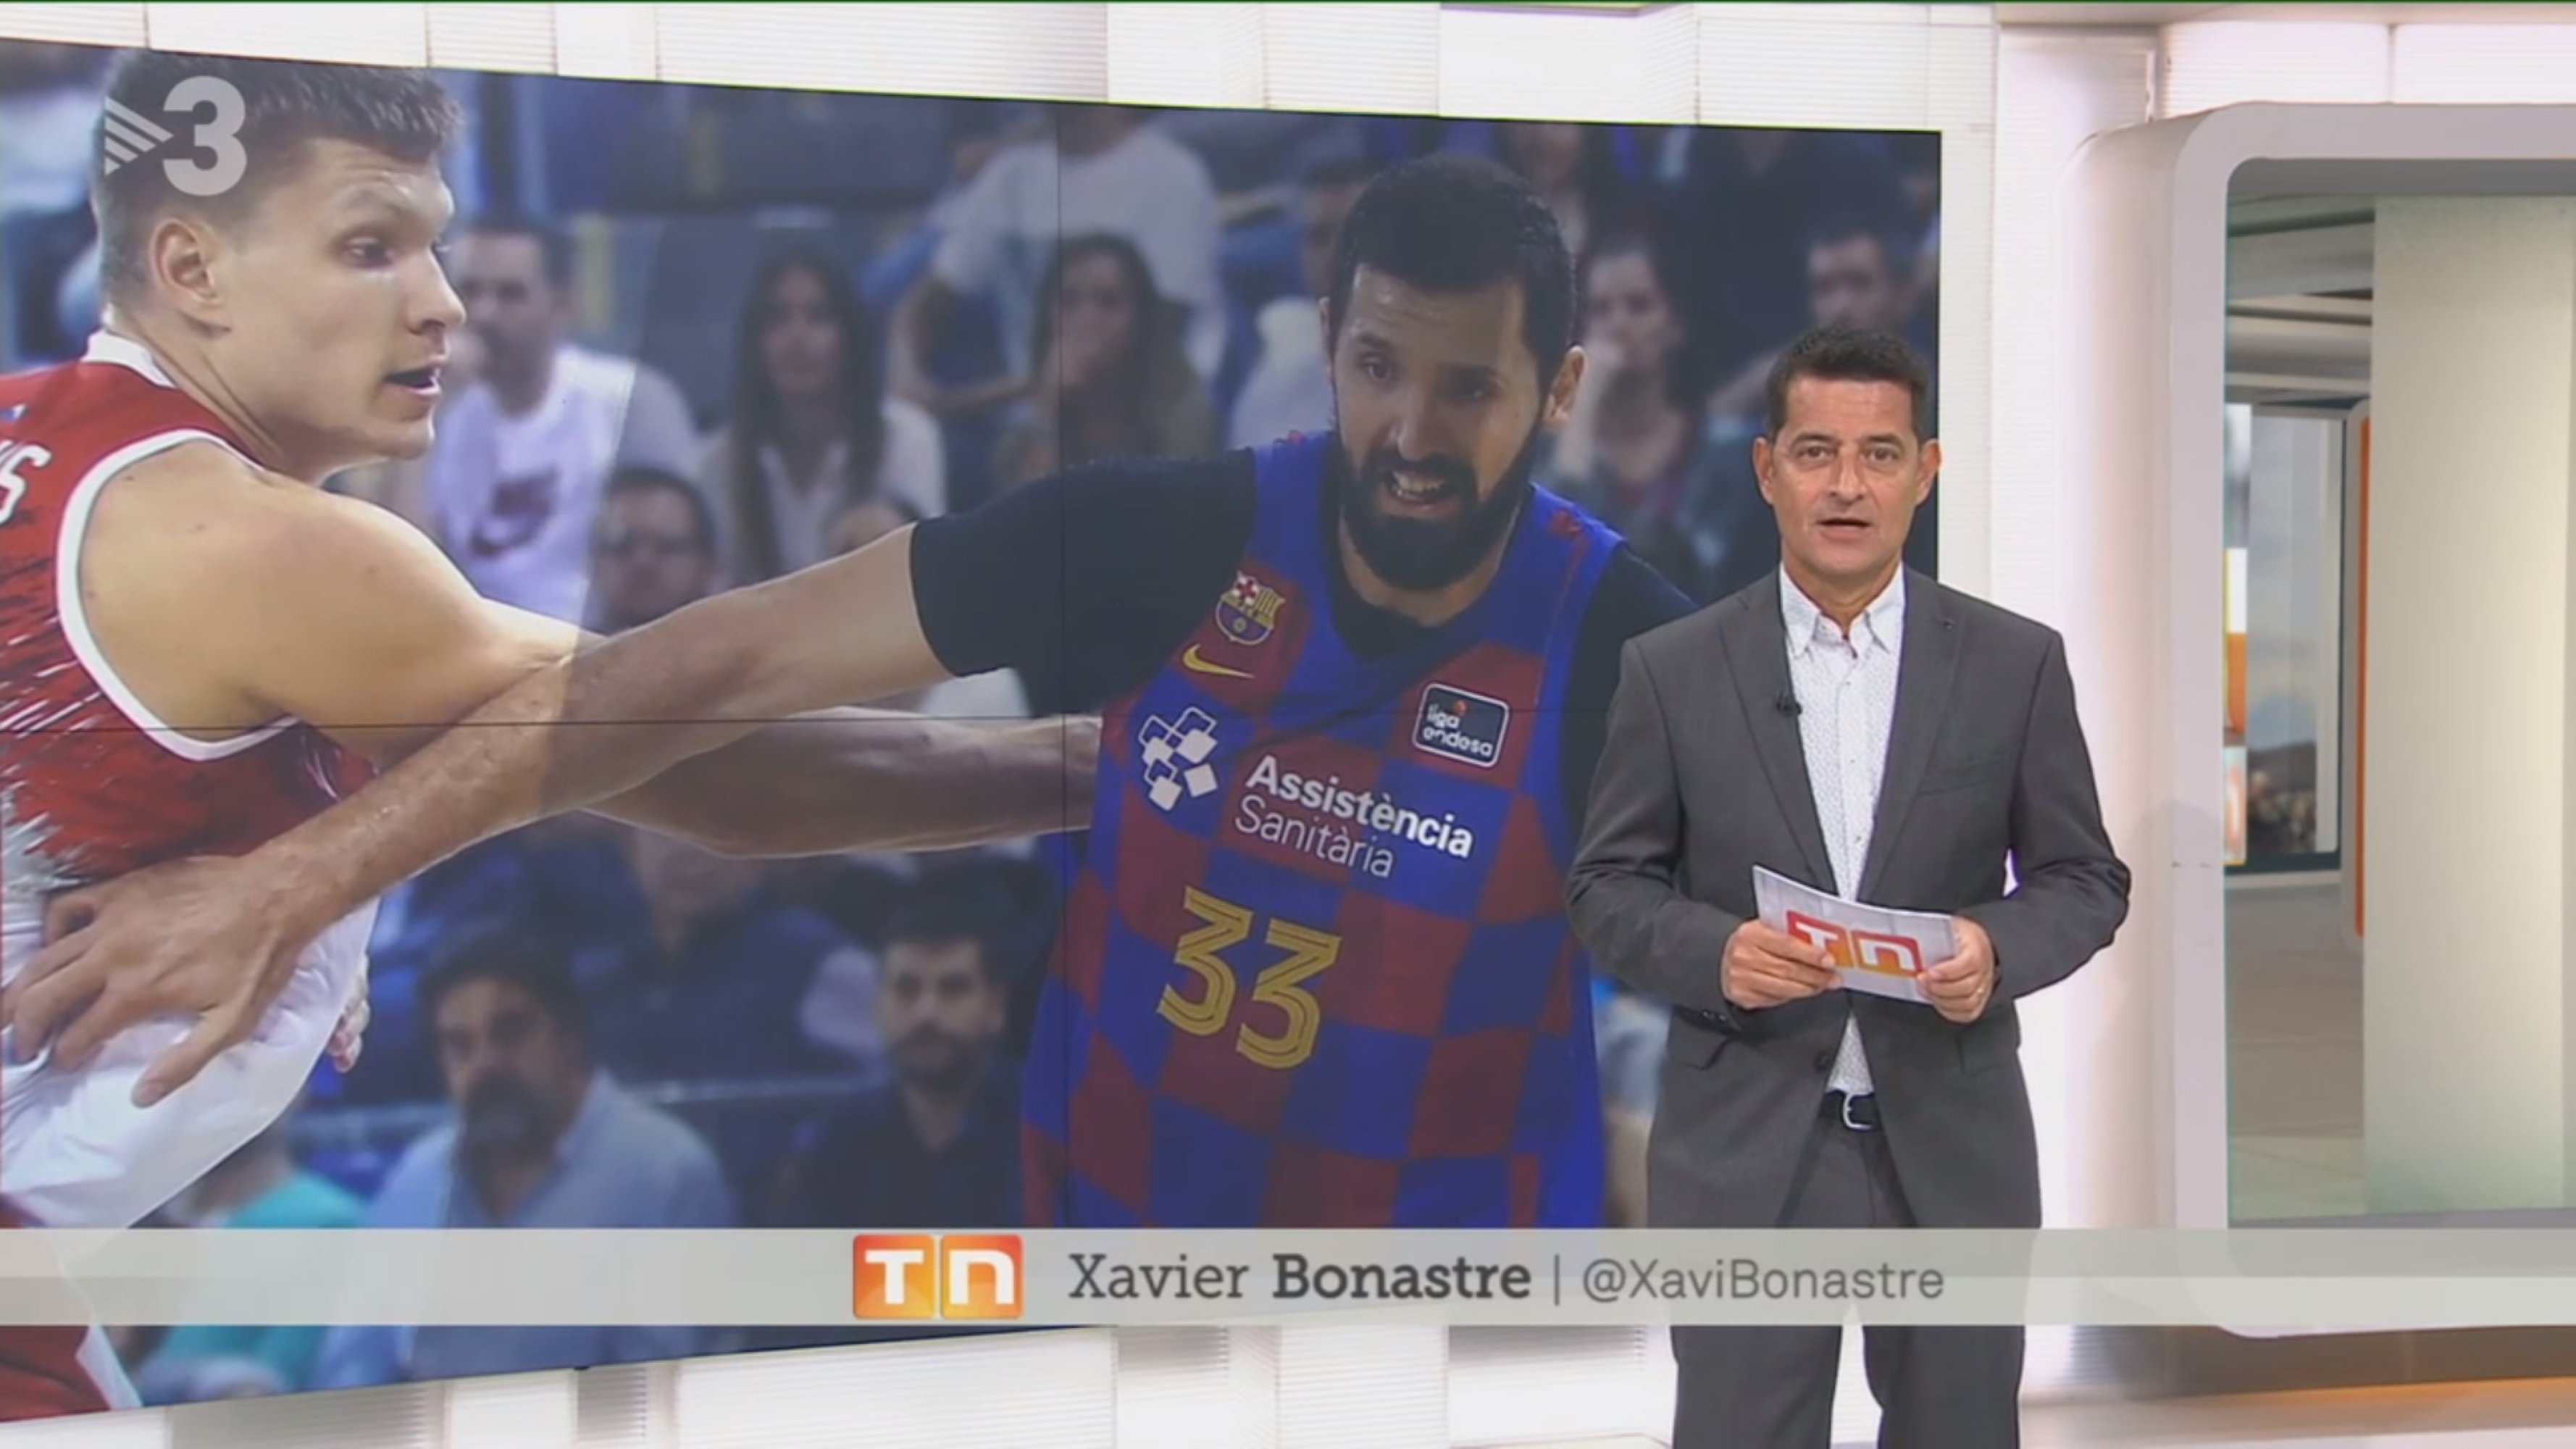 Emocionante retorno de Xavier Bonastre al TN migdia de TV3